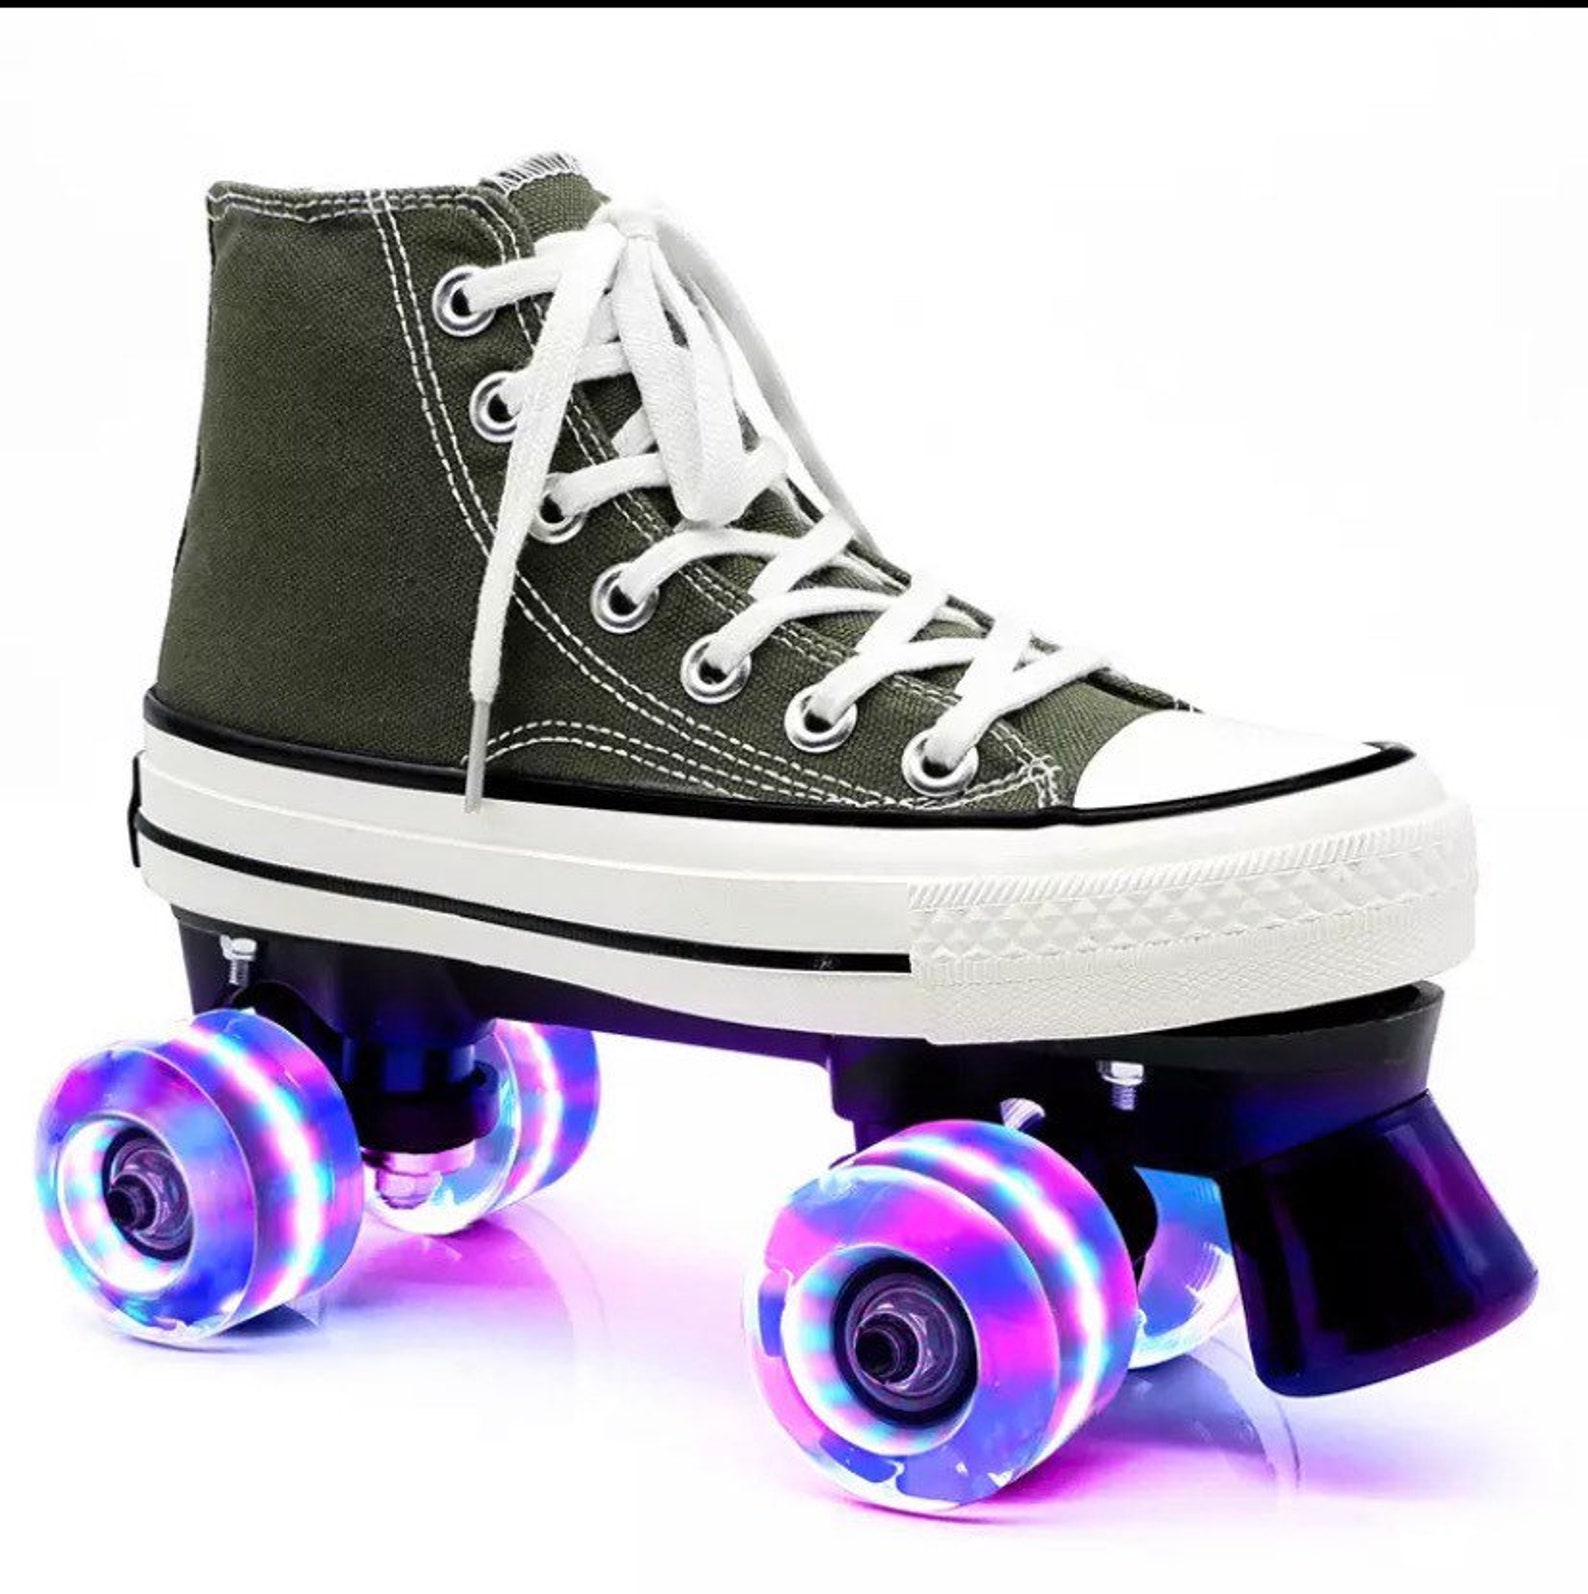 Converse inspired roller skates | Etsy